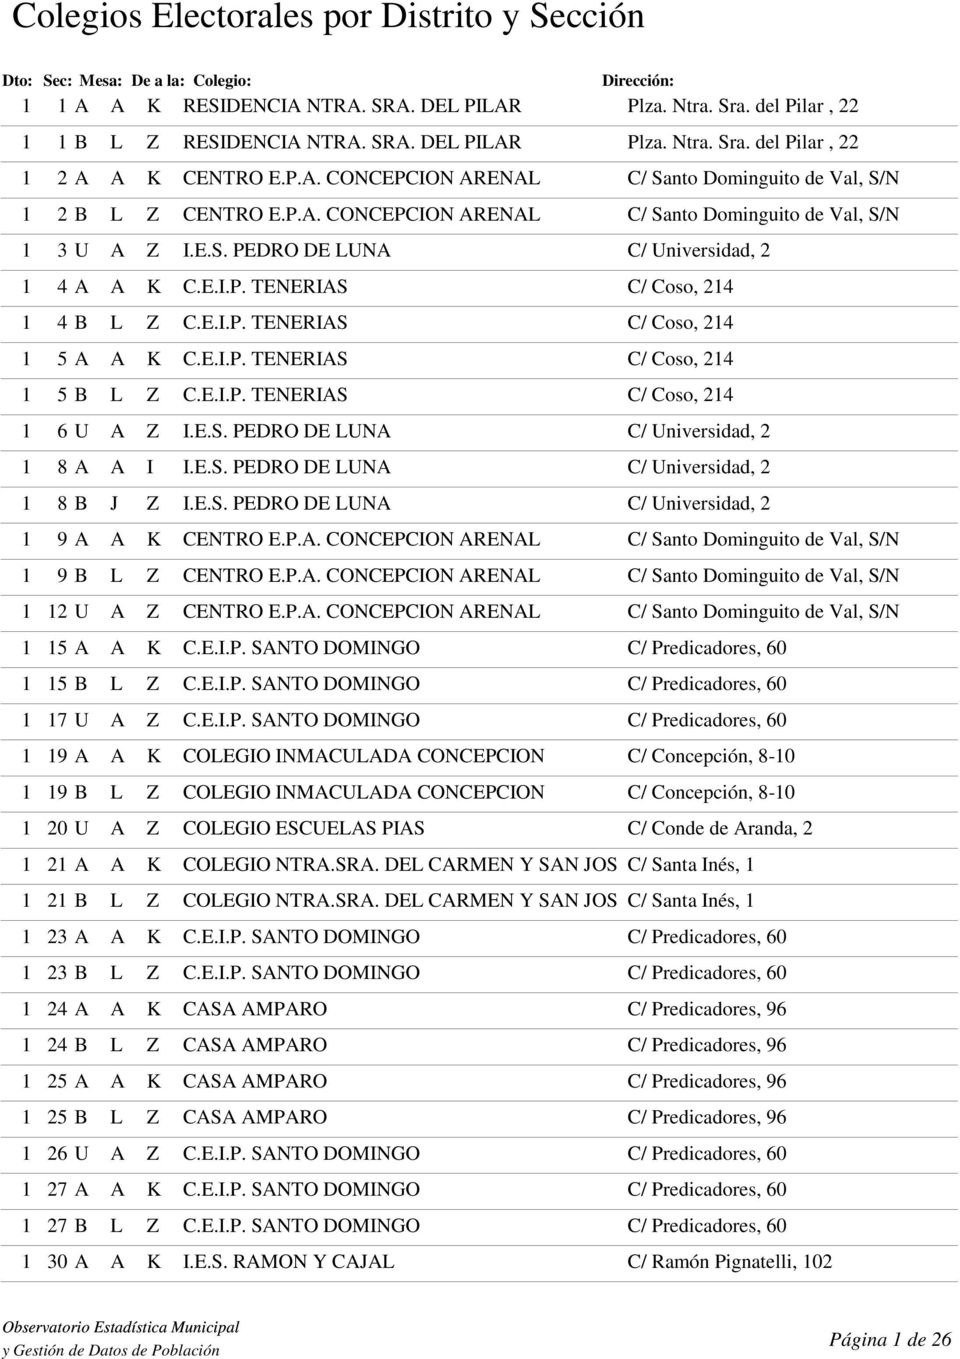 E.I.P. TENERIAS C/ Coso, 214 1 6 U A Z I.E.S. PEDRO DE LUNA C/ Universidad, 2 1 8 A A I I.E.S. PEDRO DE LUNA C/ Universidad, 2 1 8 B J Z I.E.S. PEDRO DE LUNA C/ Universidad, 2 1 9 A A K CENTRO E.P.A. CONCEPCION ARENAL C/ Santo Dominguito de Val, S/N 1 9 B L Z CENTRO E.